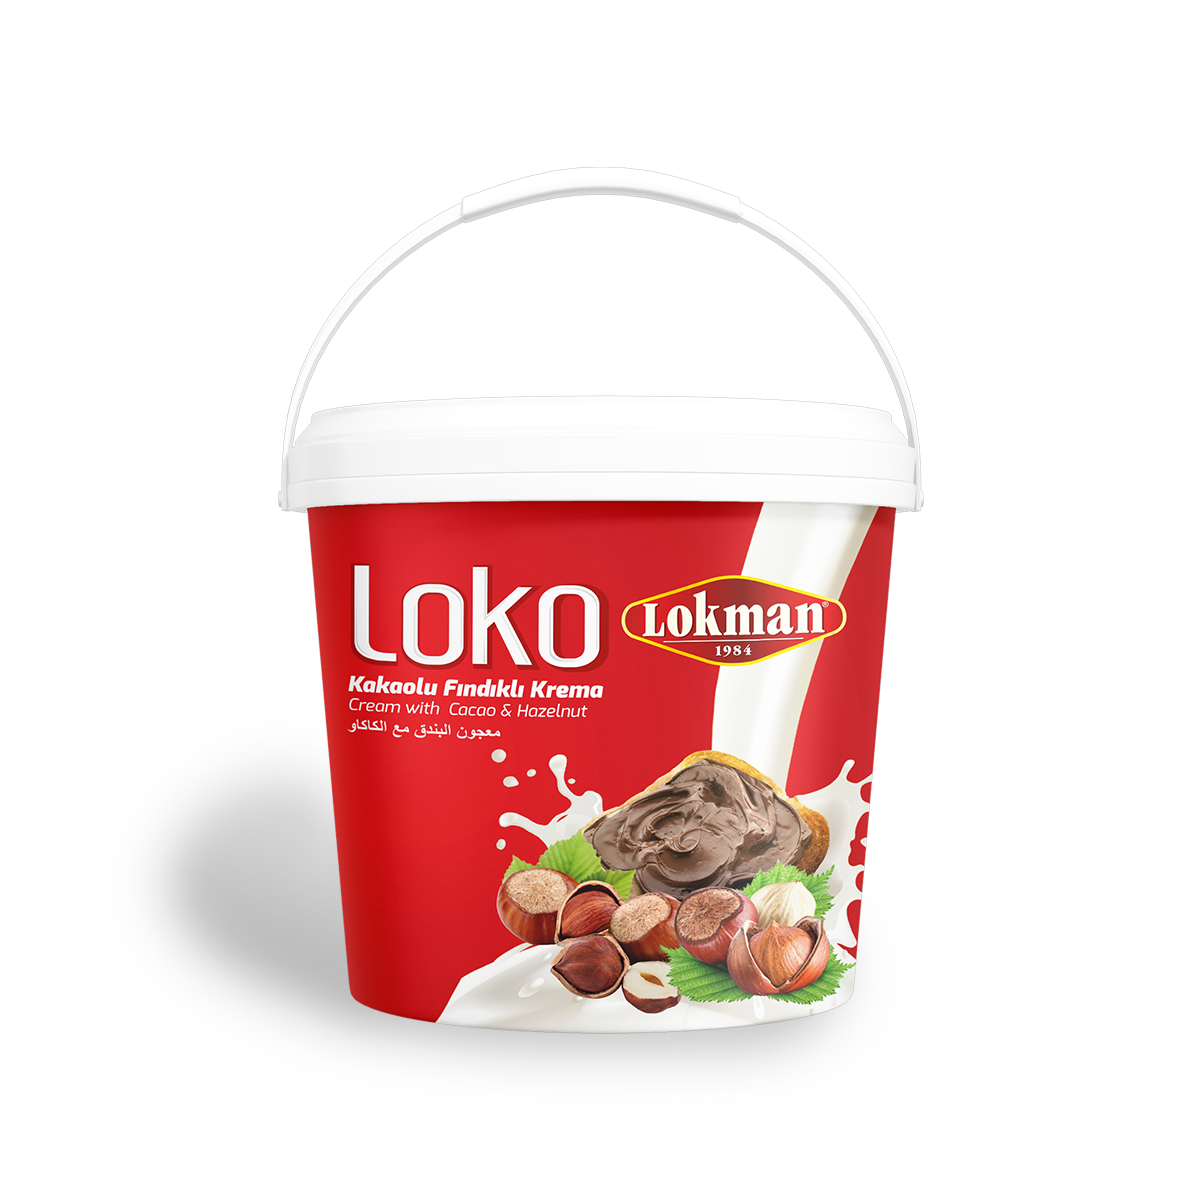 Lokman Kova Kakaolu Fındıklı Krema / LOKO 5 KG